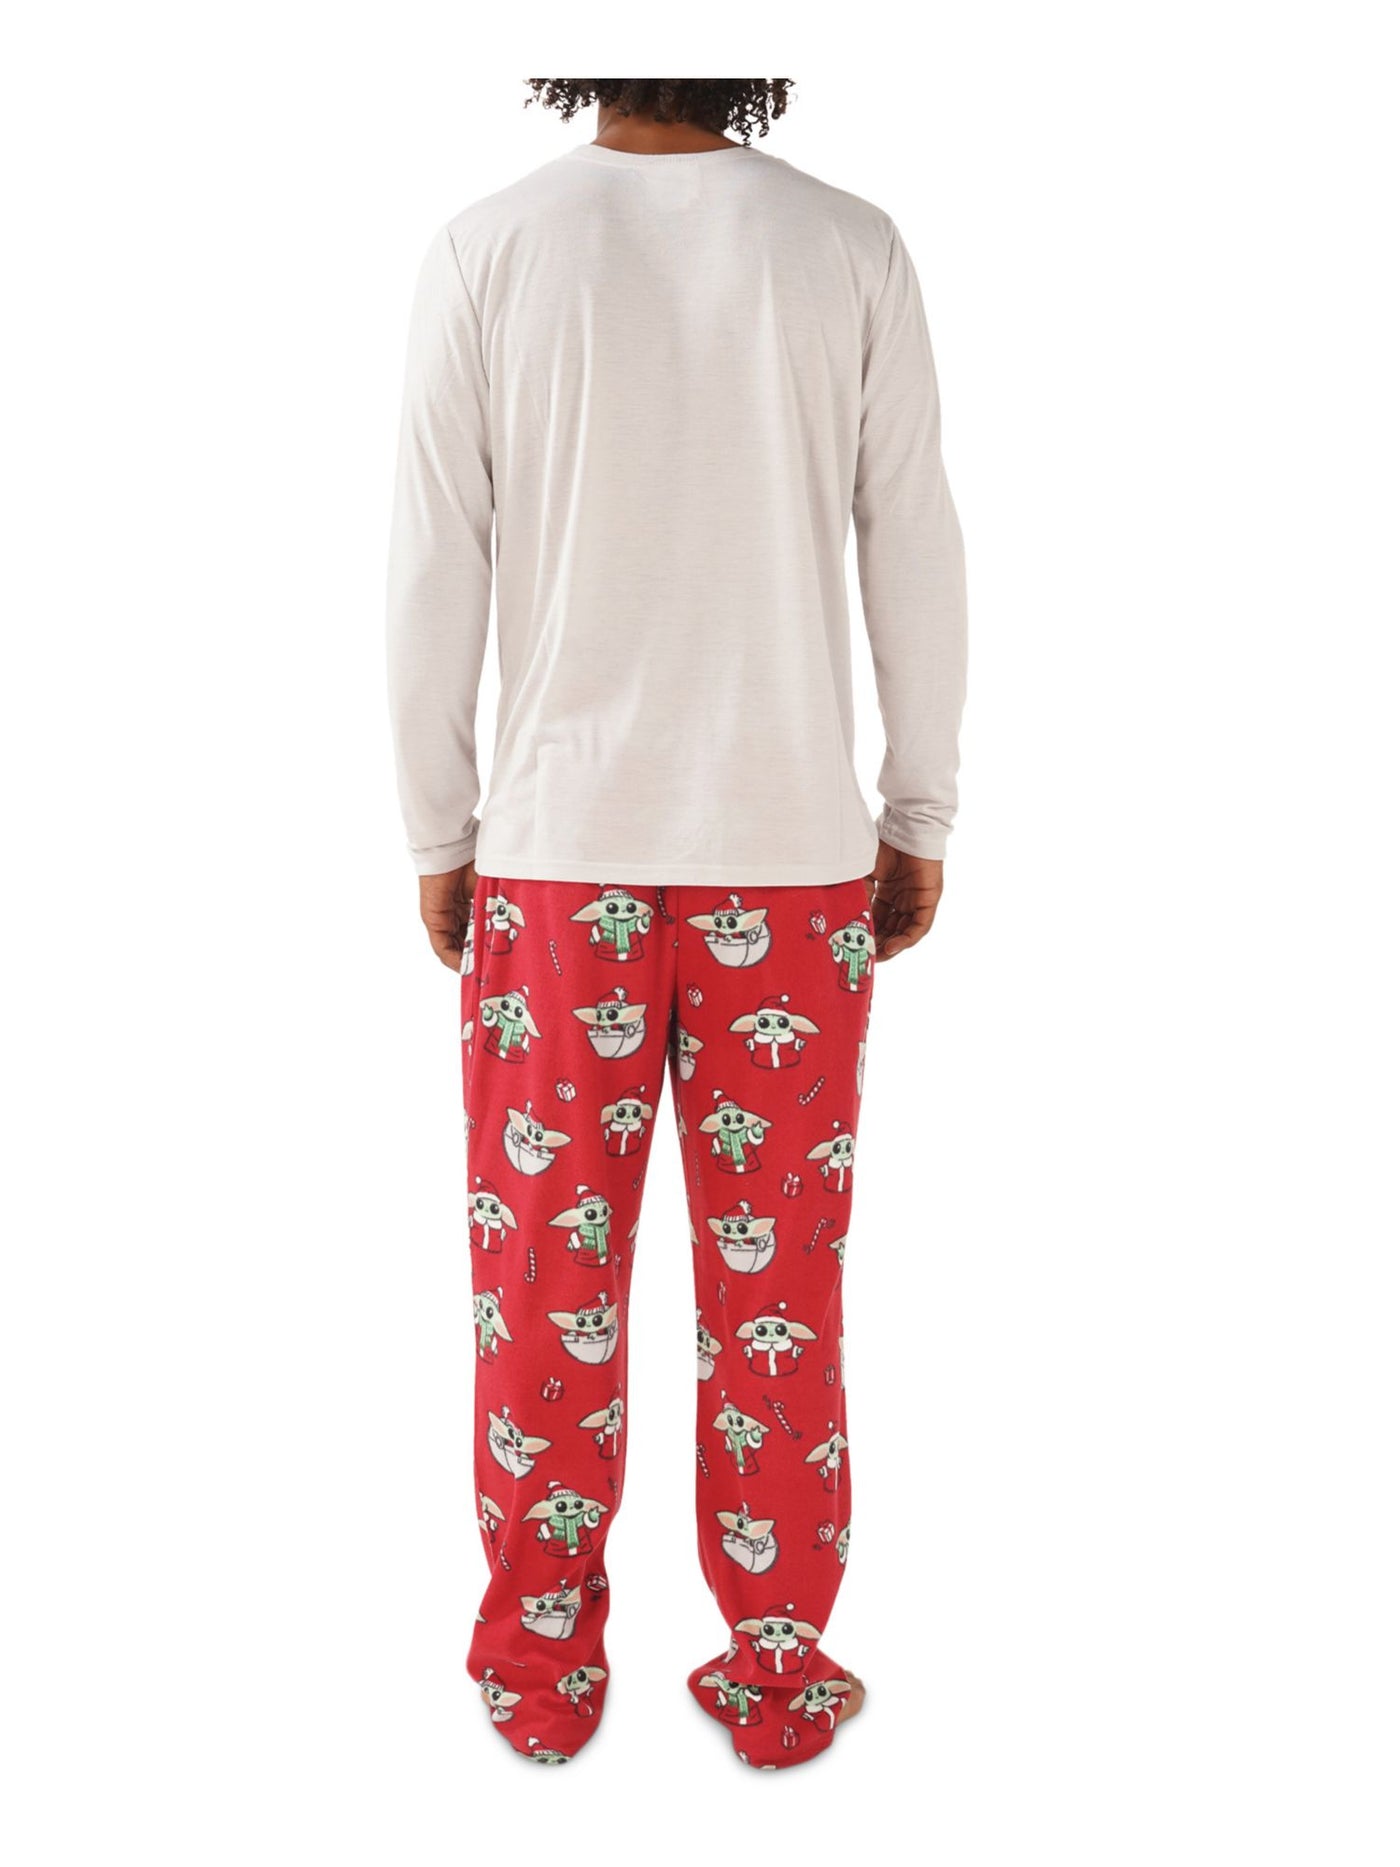 HYBRID APPAREL Mens Red Graphic Top Elastic Band Long Sleeve Straight leg Pants Pajamas L